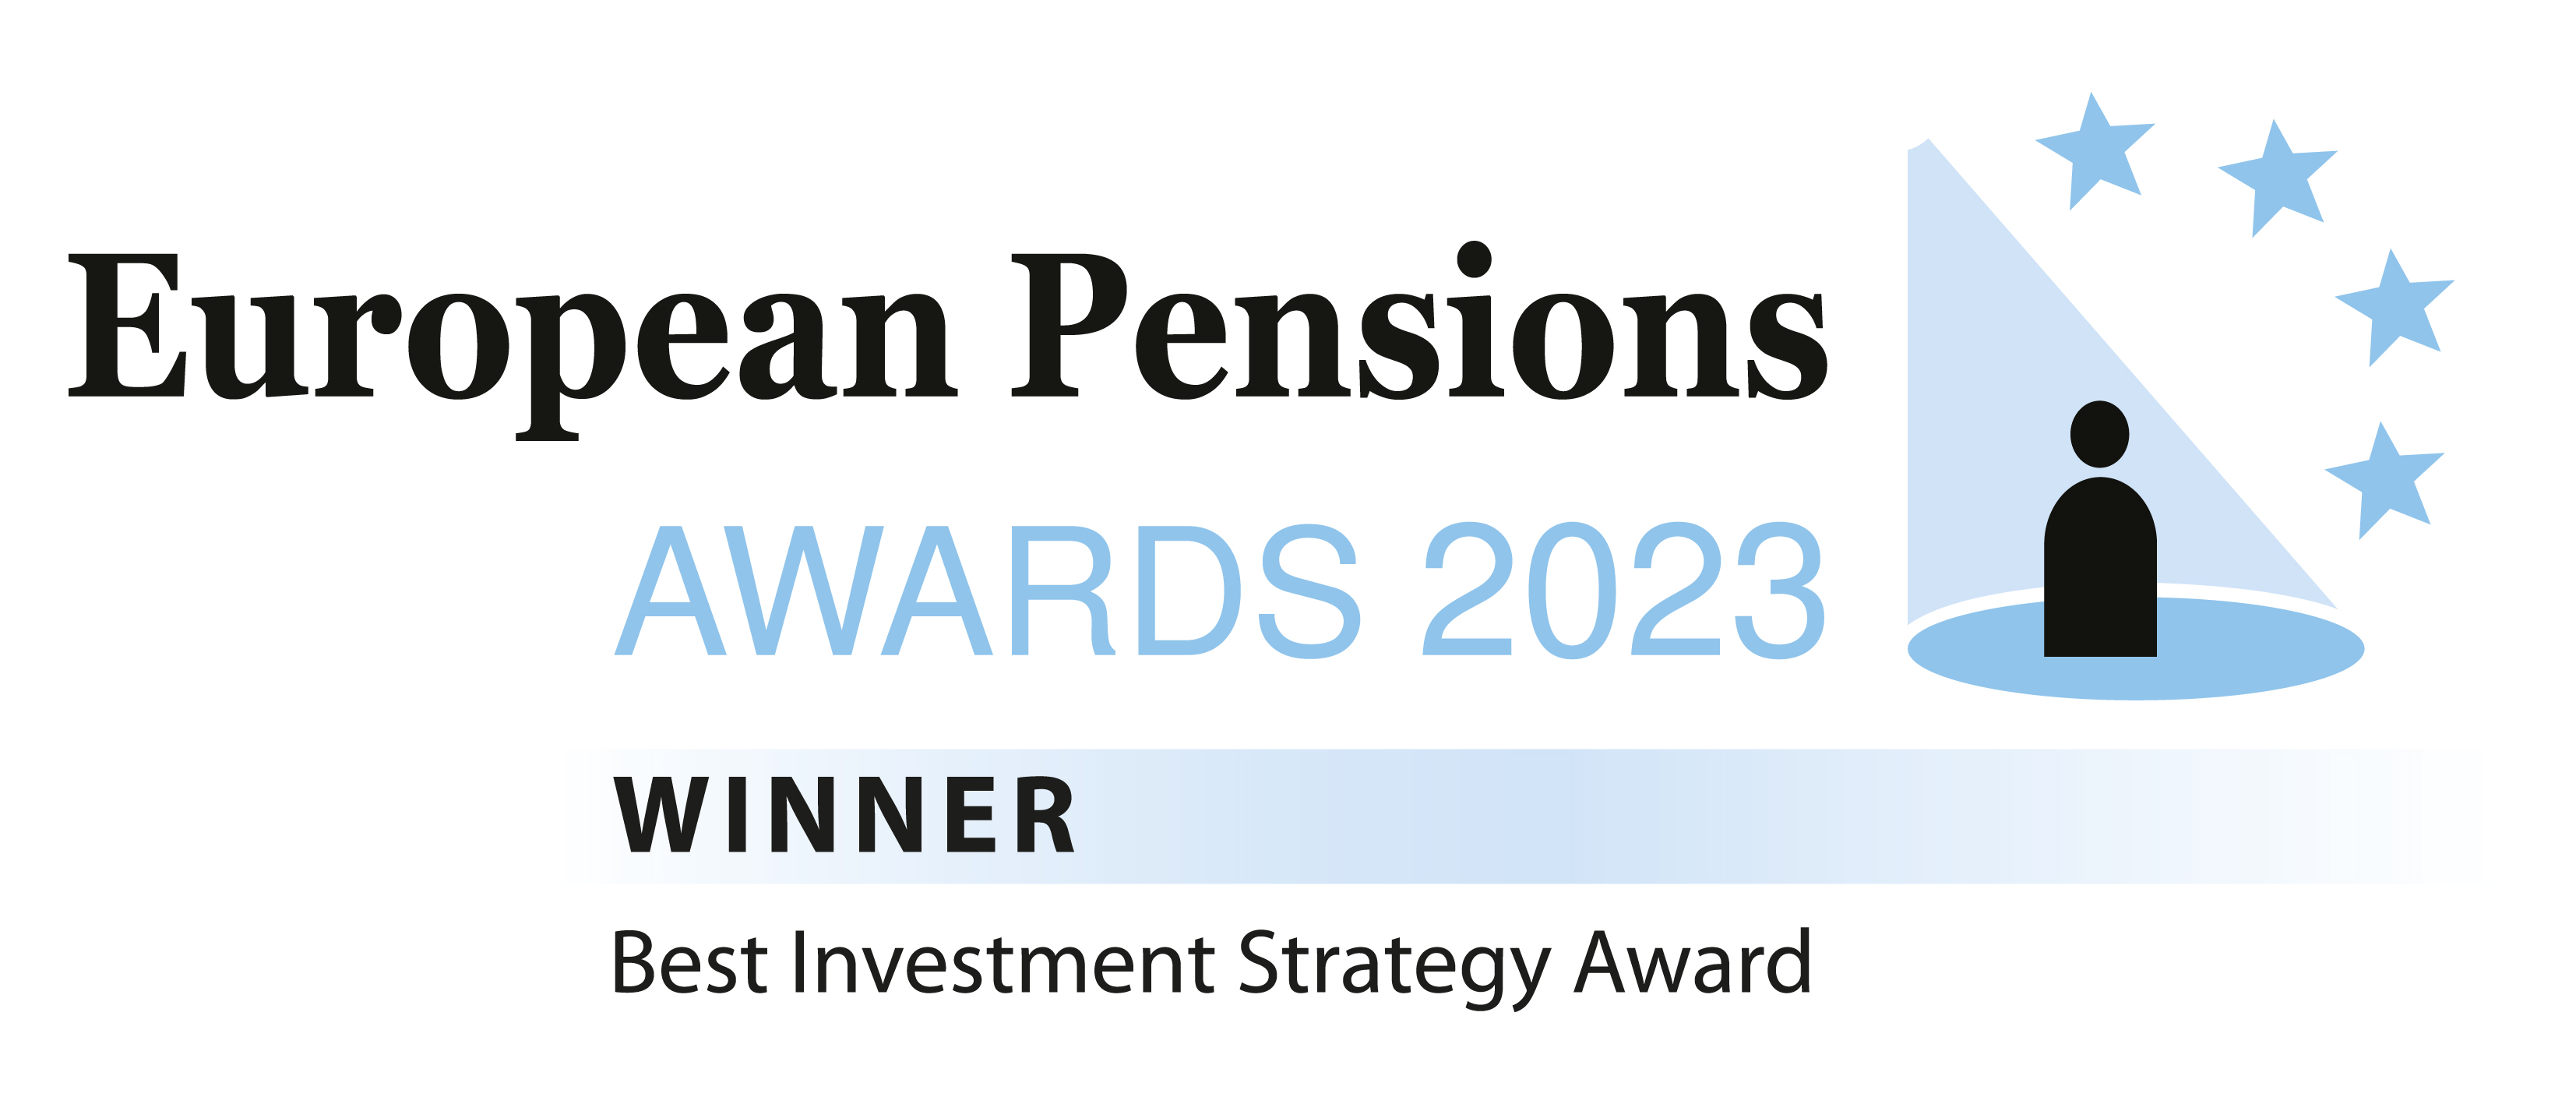 European pensions awards 2020 winner European pension fund of the year